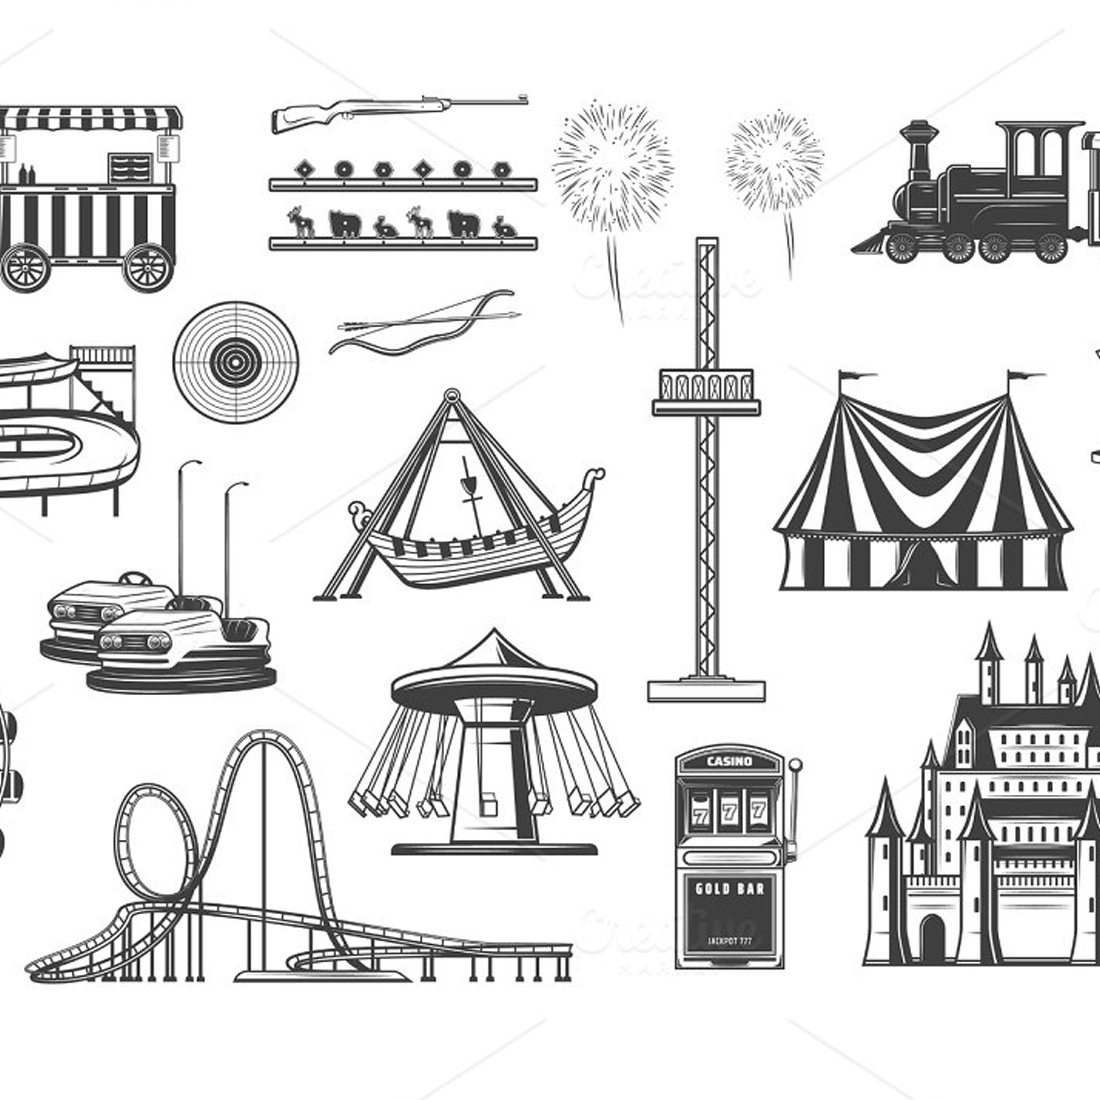 Amusement Parks Ferris Wheel Flat Icon Graphic by printablesplazza ·  Creative Fabrica